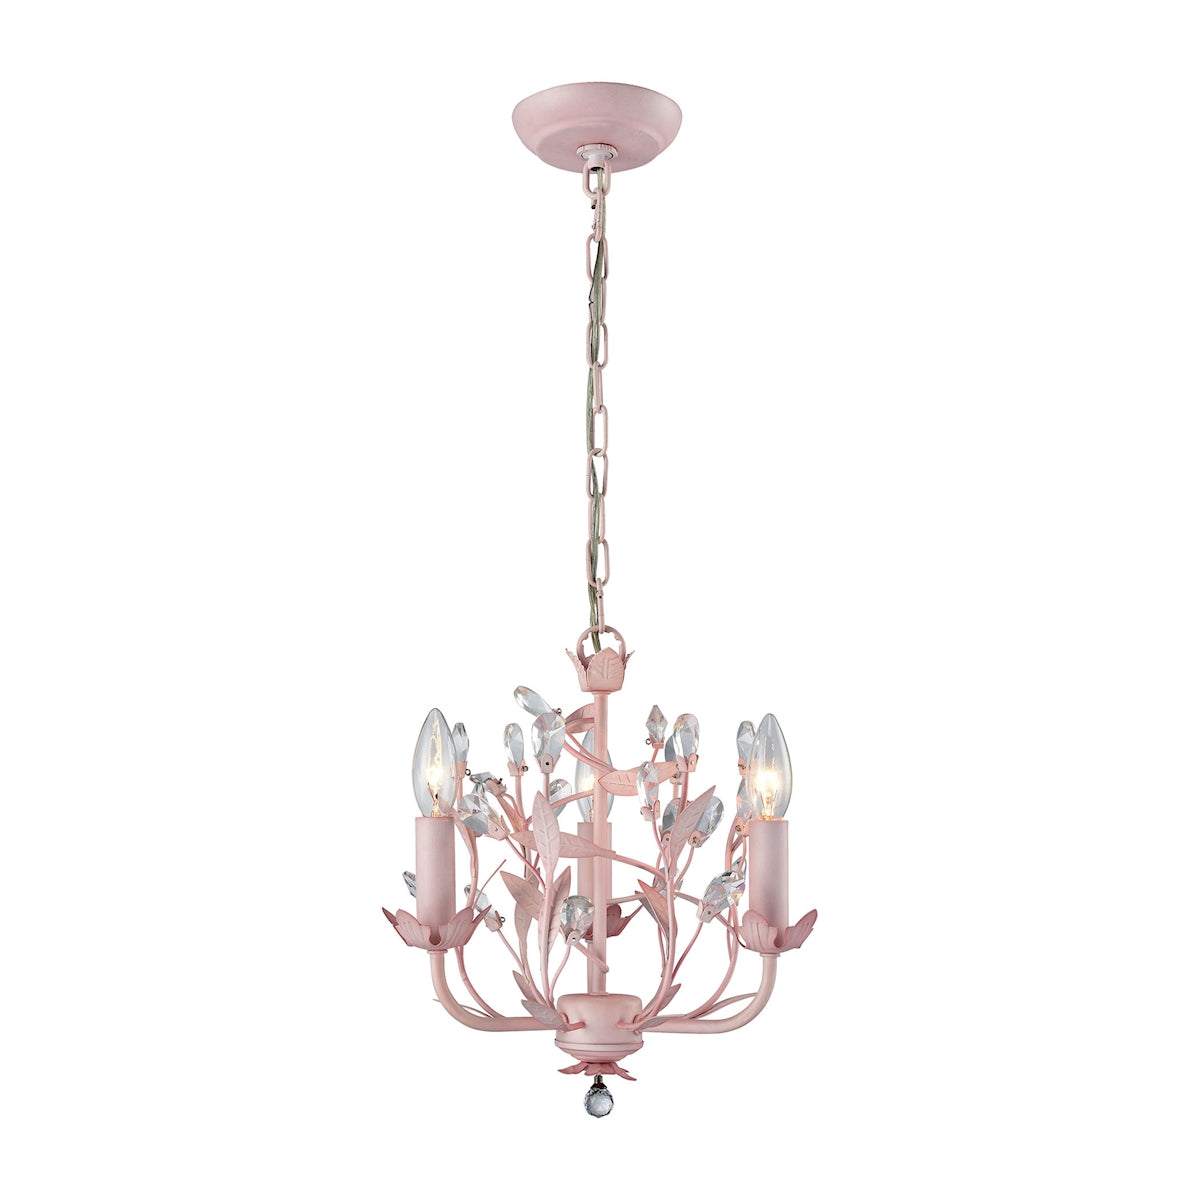 ELK Lighting 18152/3 Circeo 3-Light Chandelier in Light Pink with Crystal